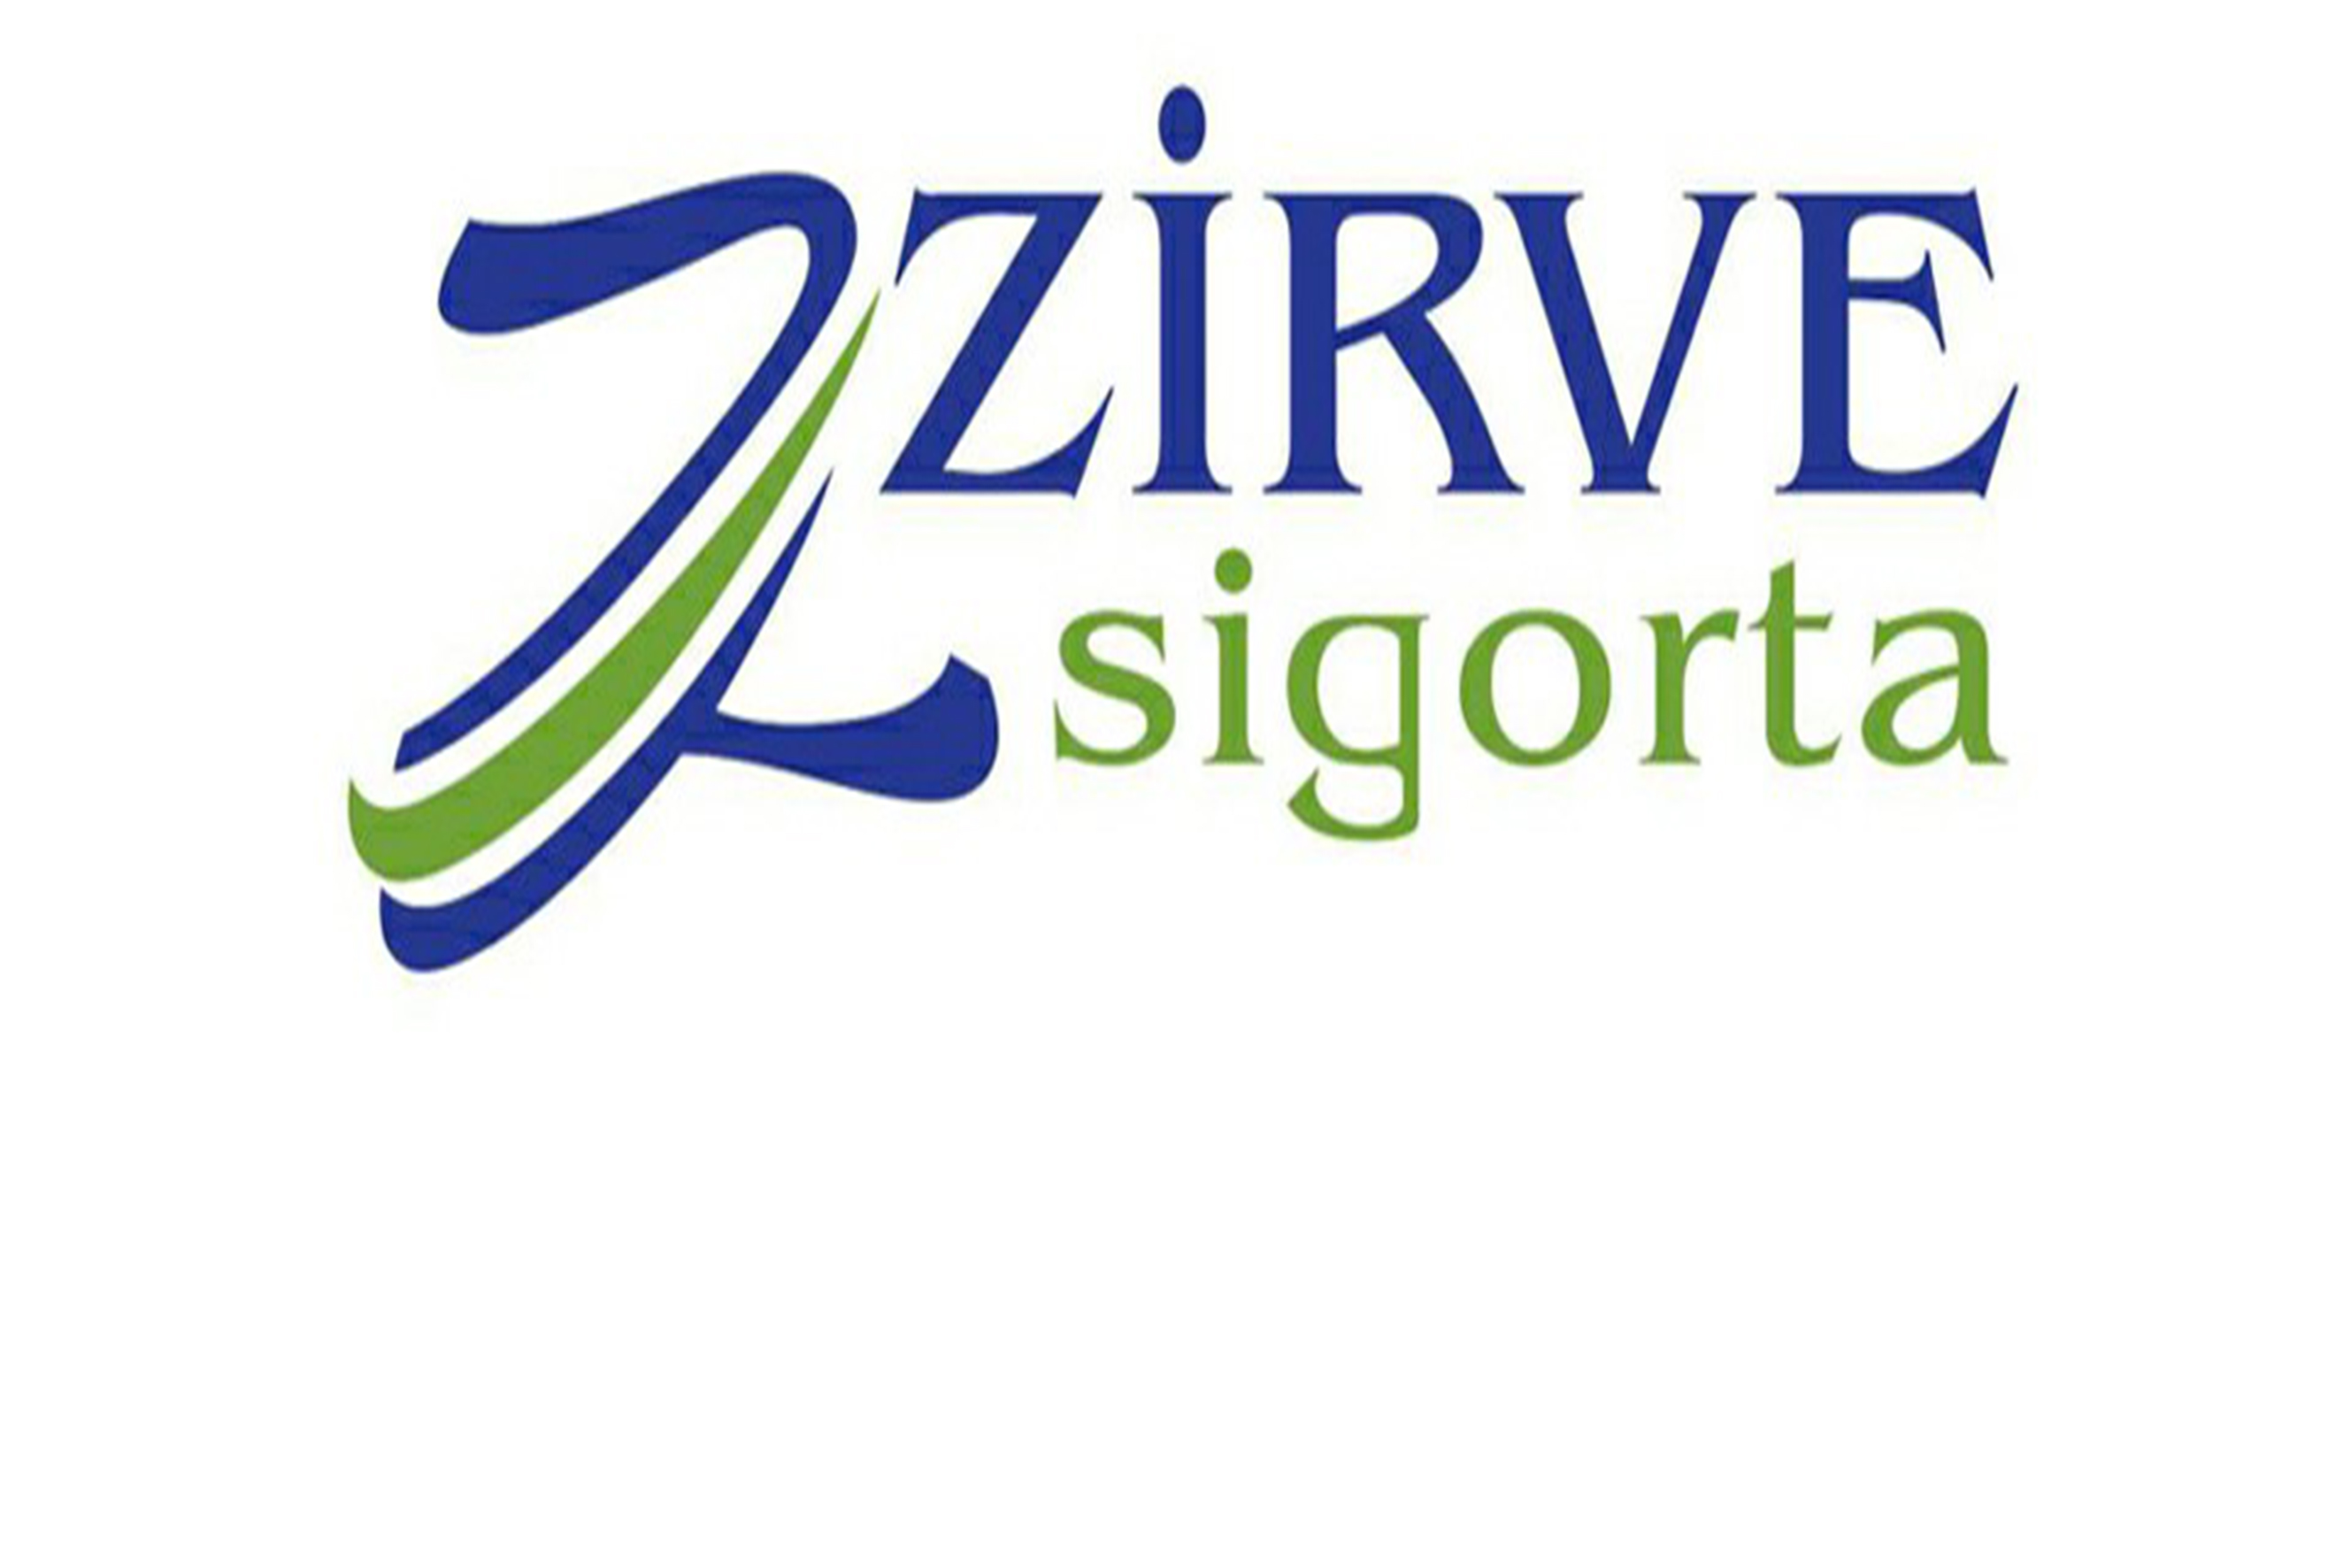 Zirve Insurance